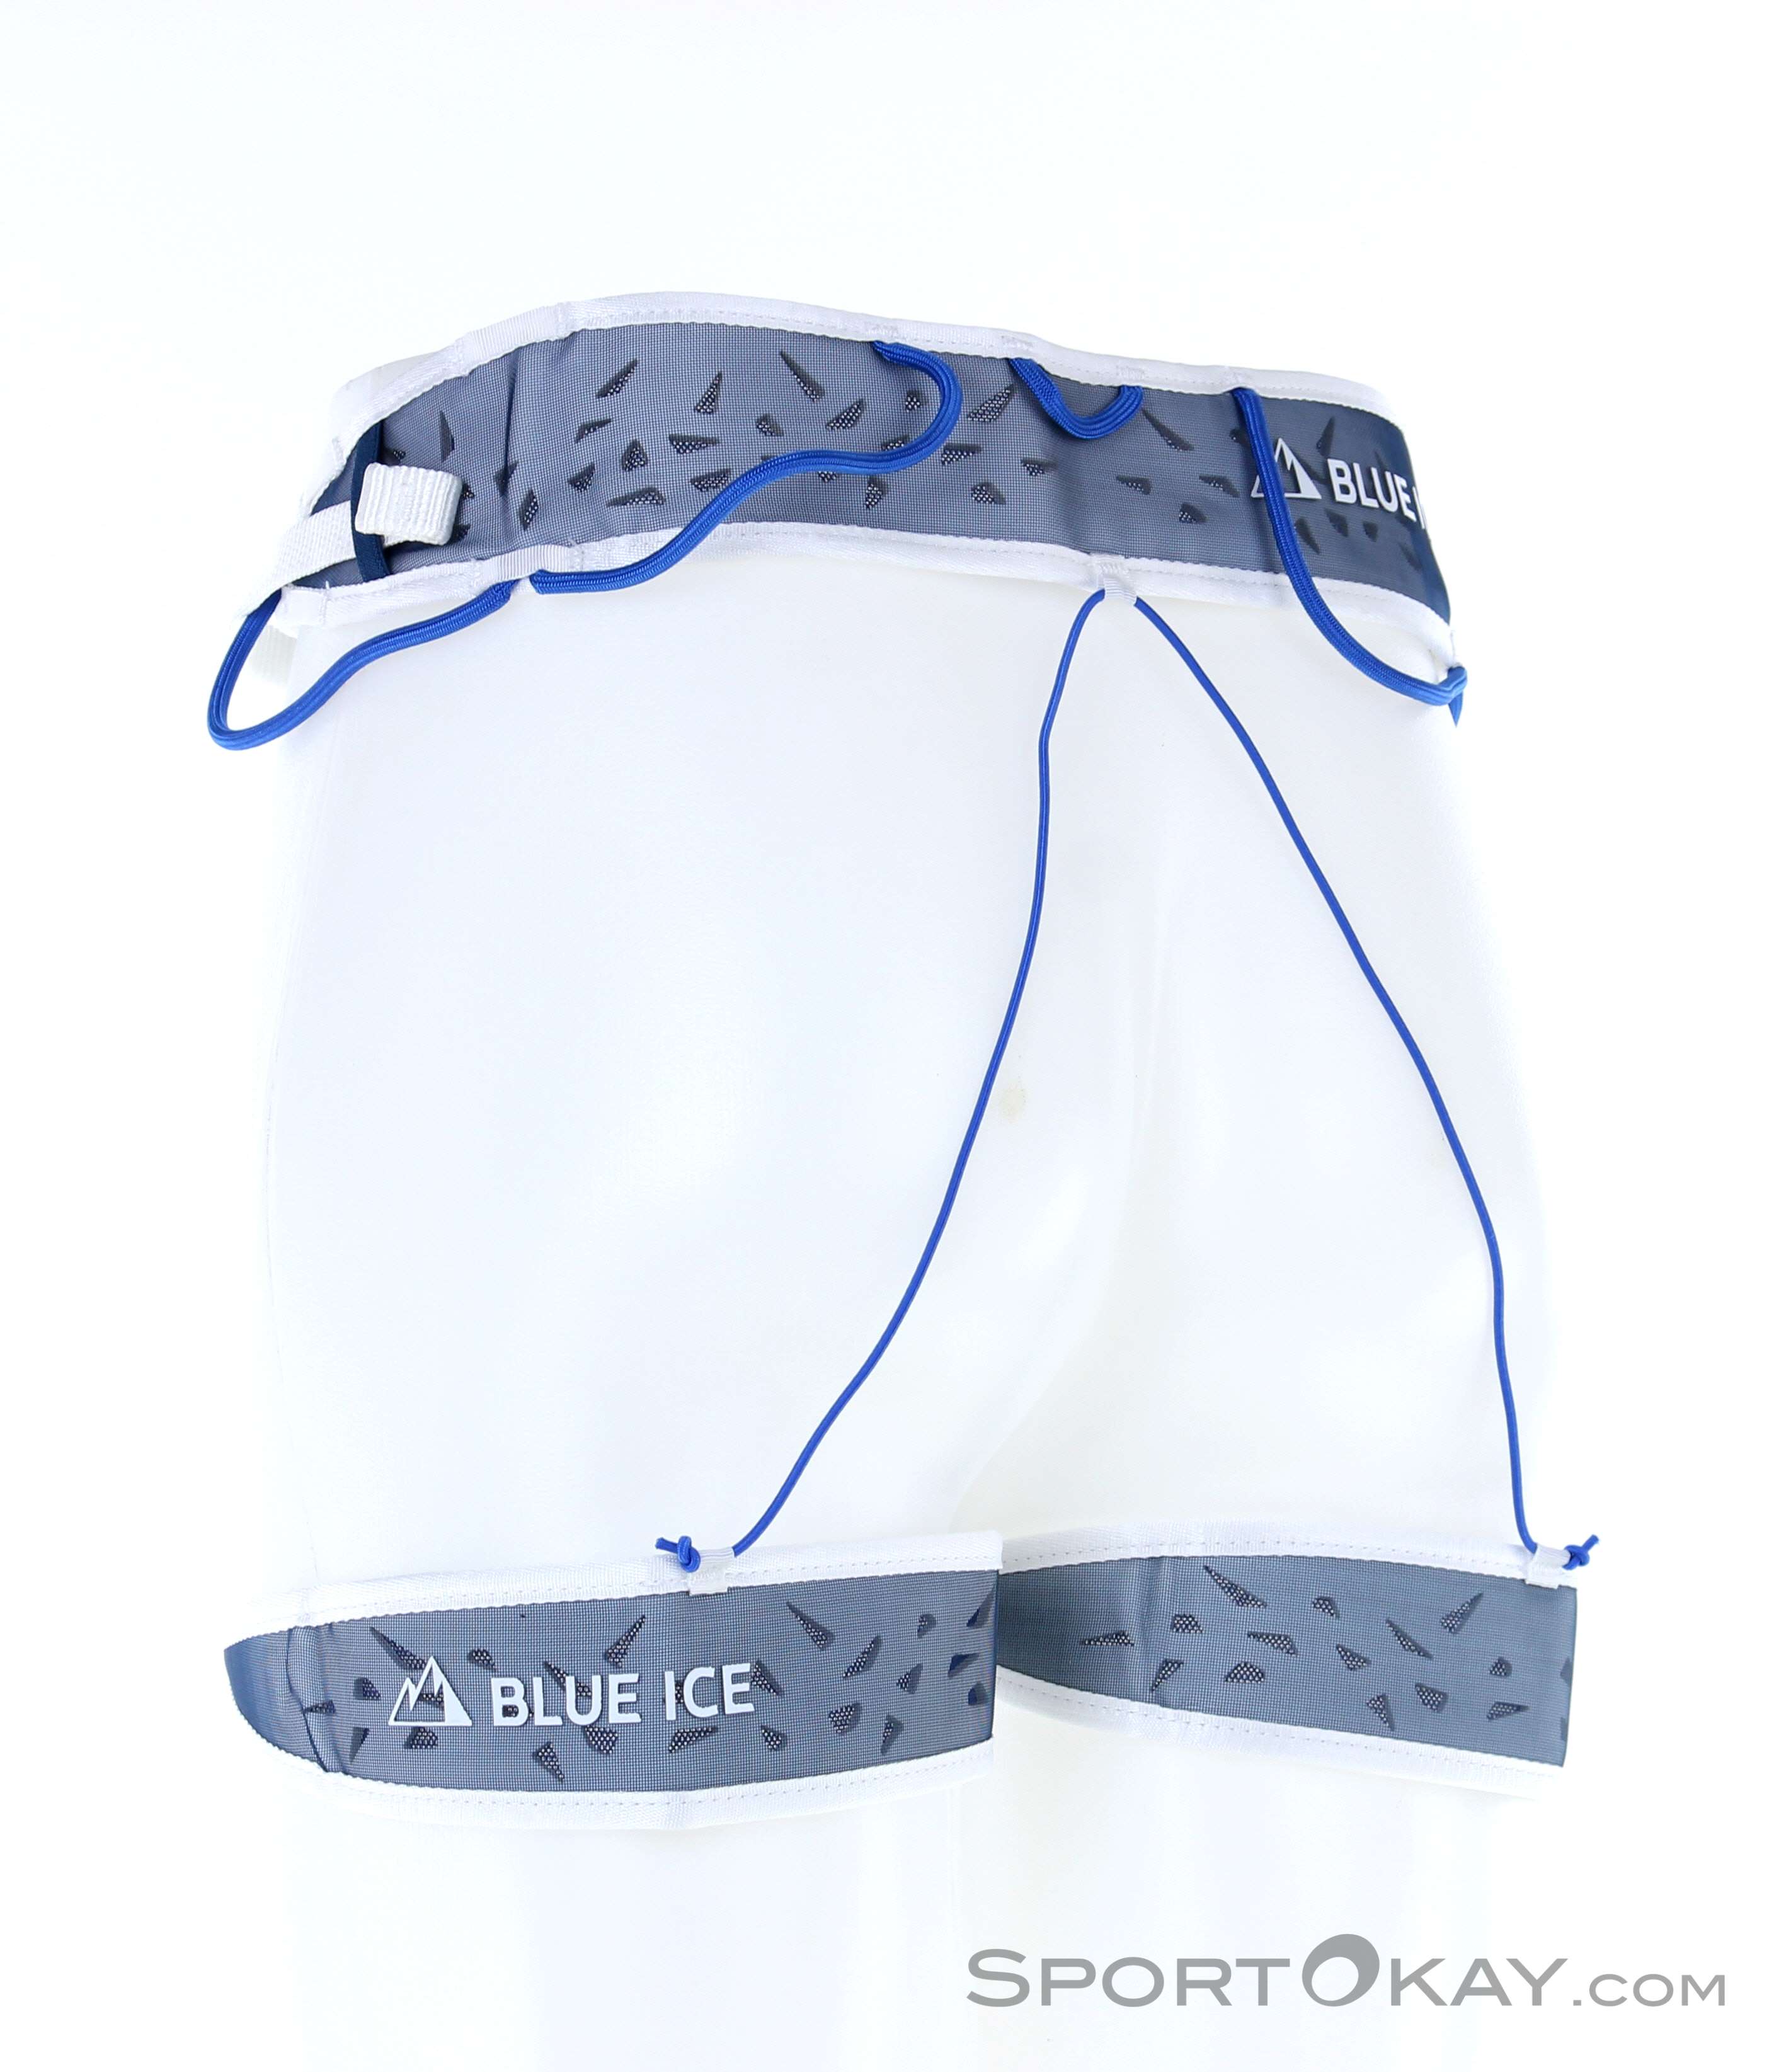 BLUE ICE Addax Harness